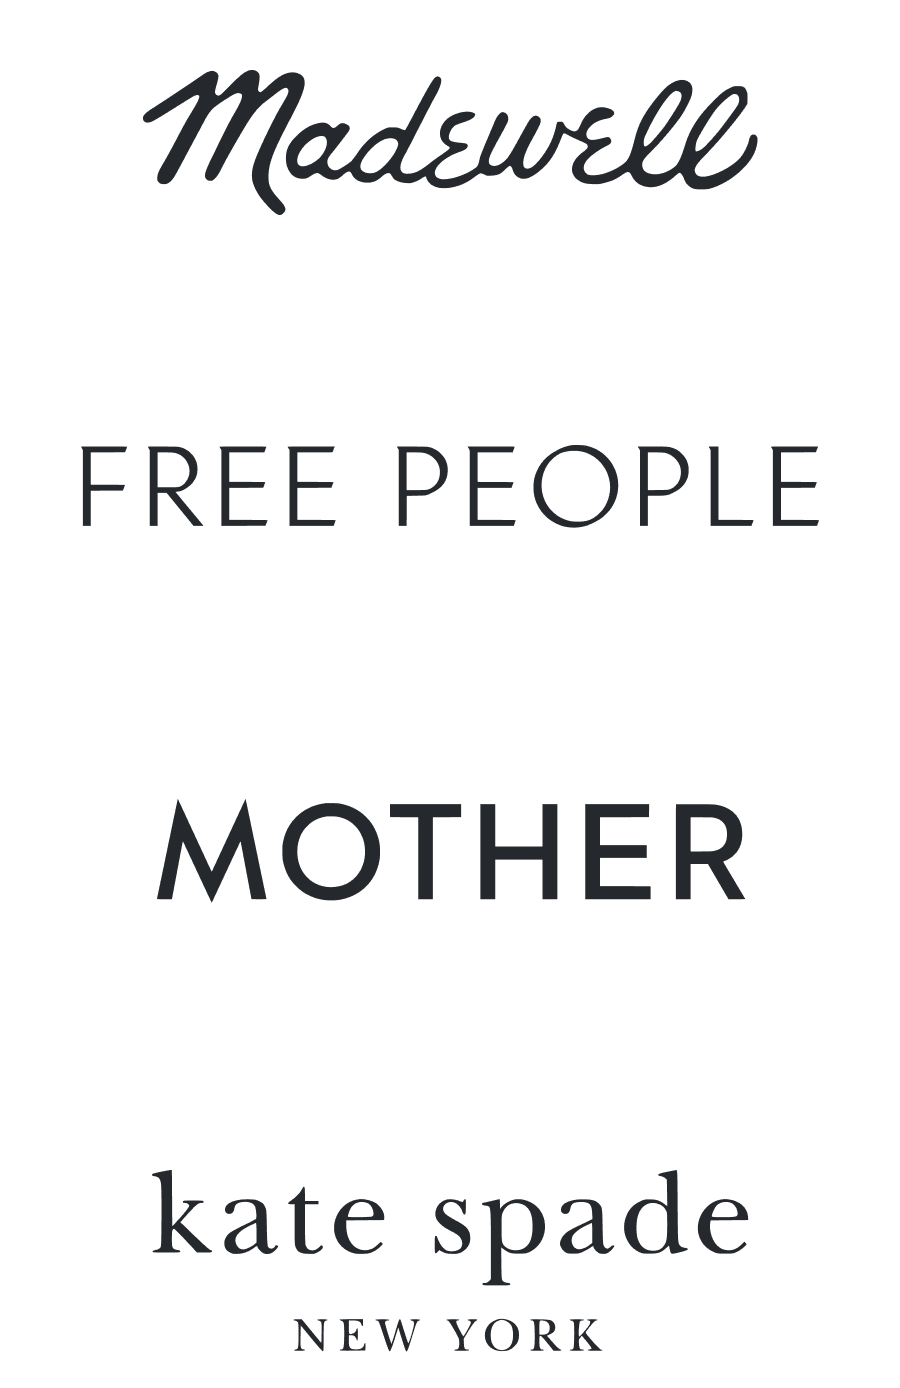 Madewell, Free People, MOTHER, Kate Spade logos